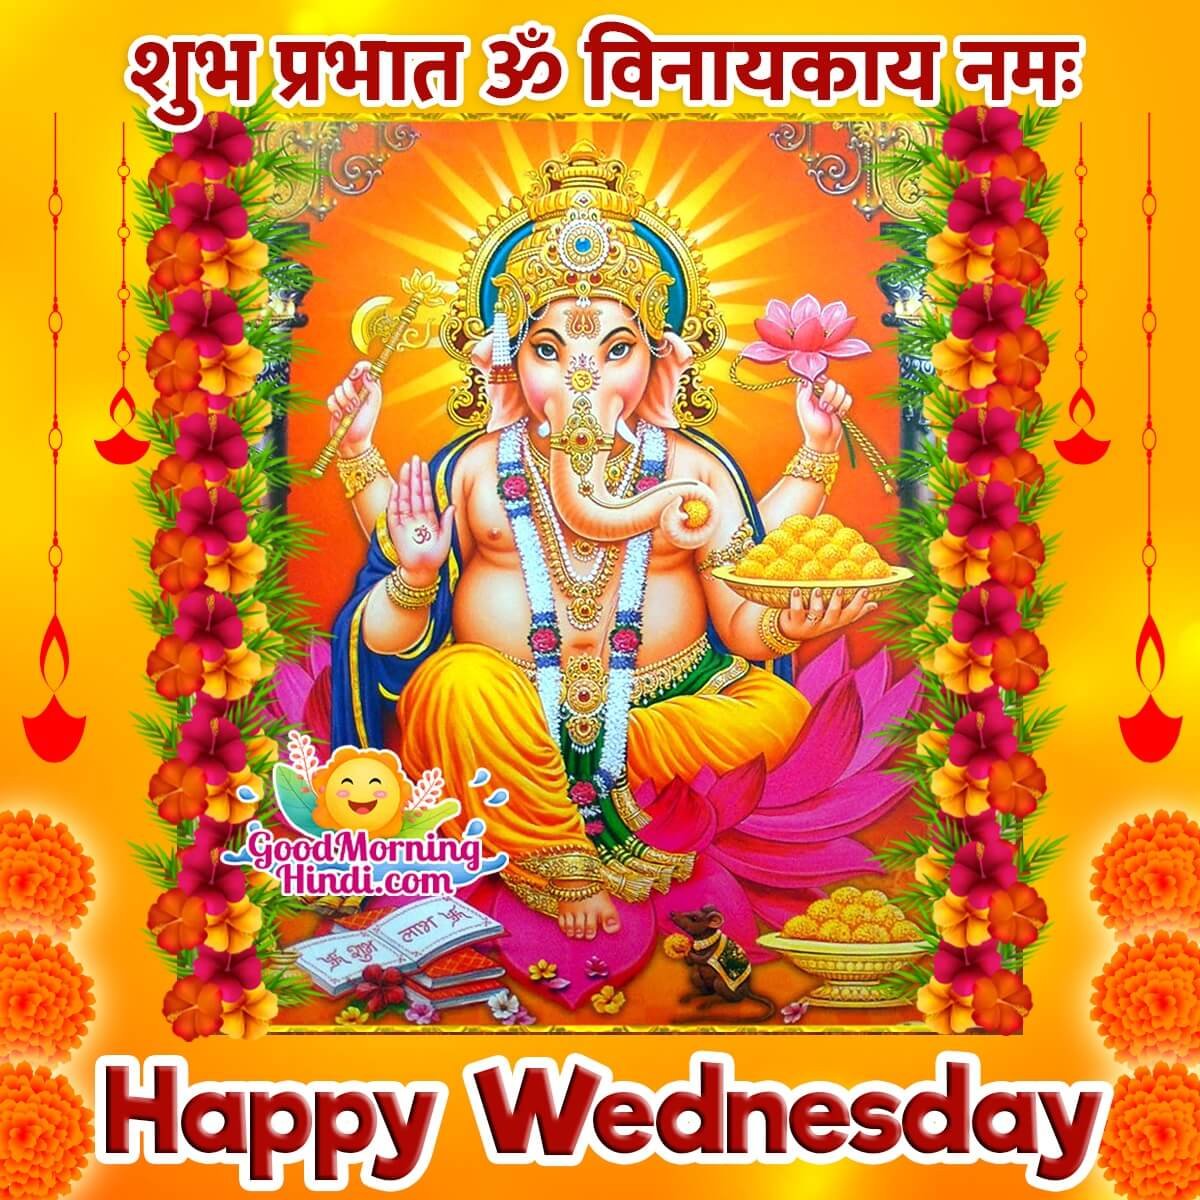 Shubh Prabhat Ganesha Wednesday Image